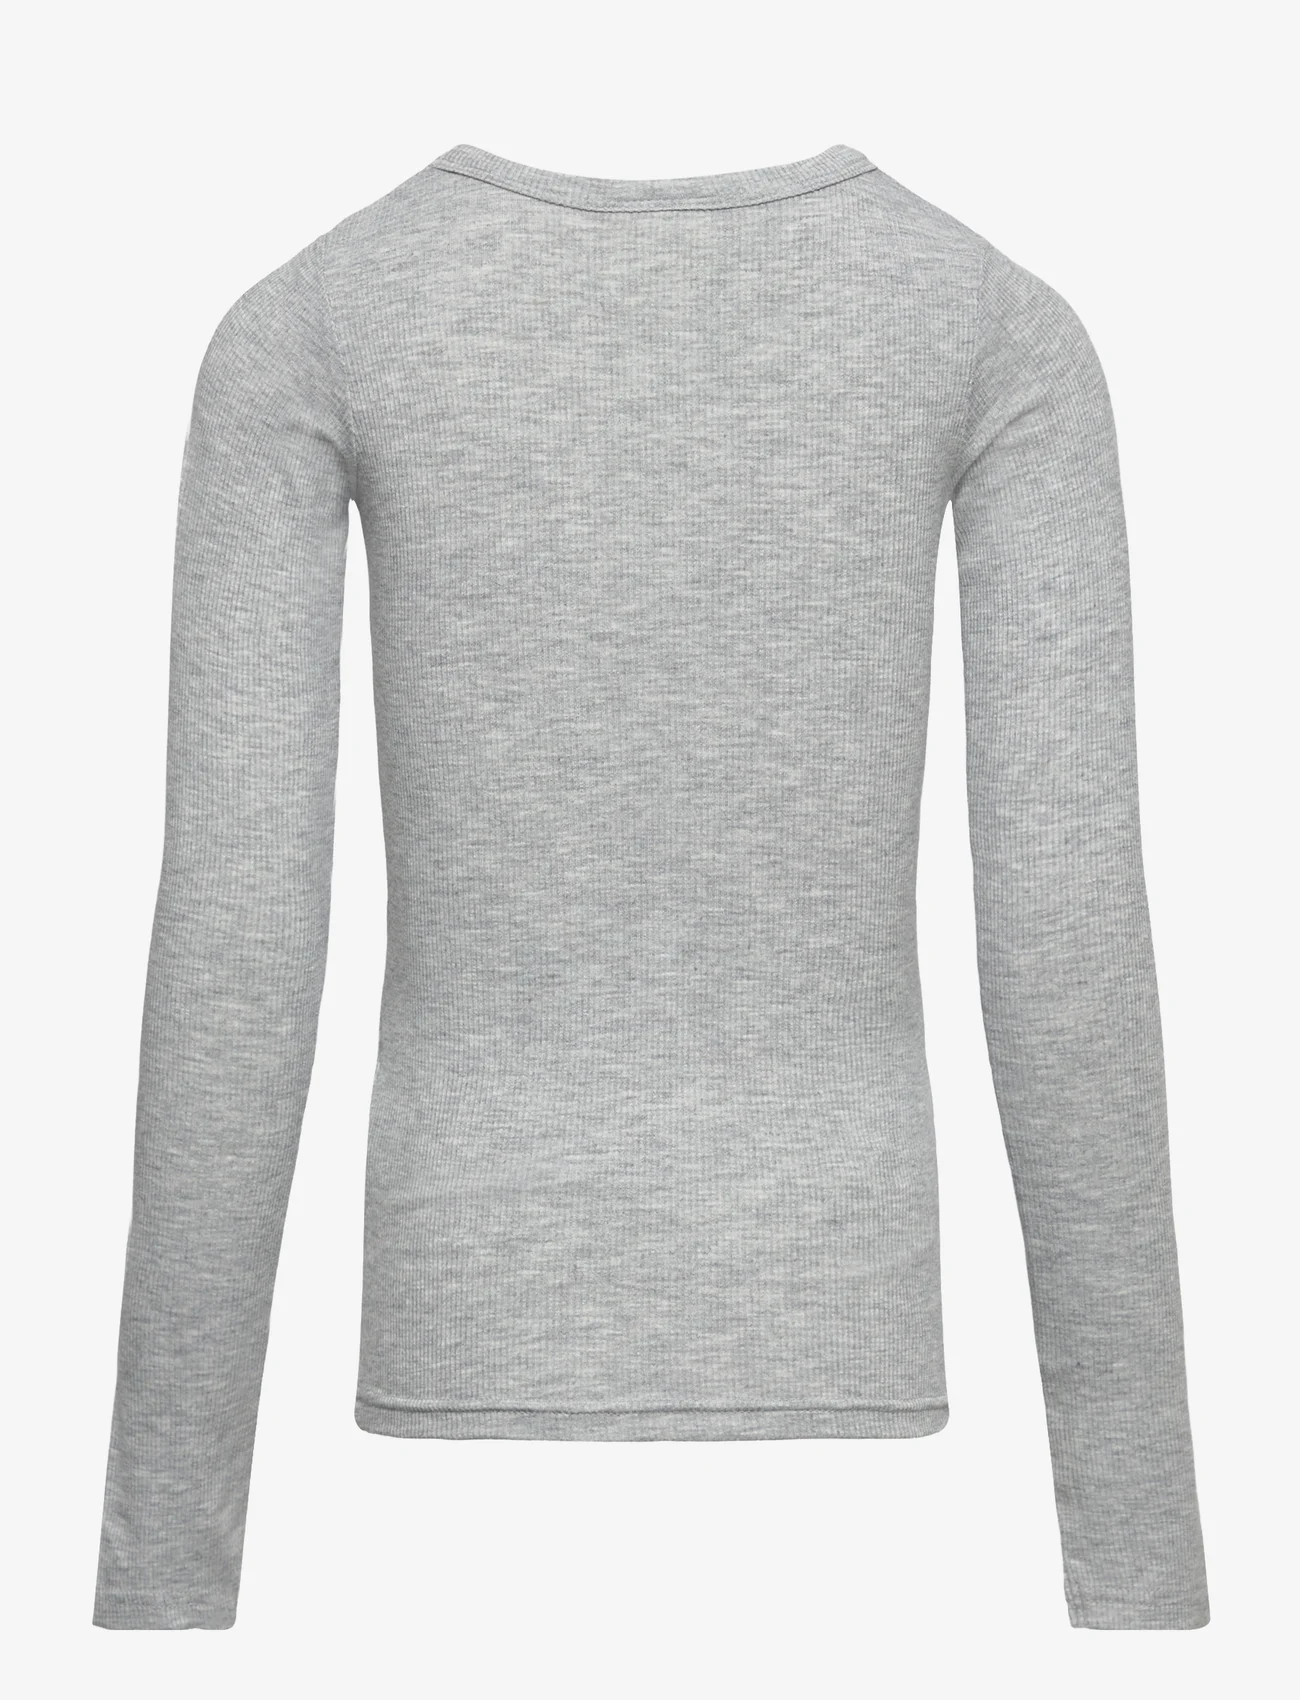 Sofie Schnoor Young - T-shirt long-sleeve - marškinėliai ilgomis rankovėmis - grey mel - 1